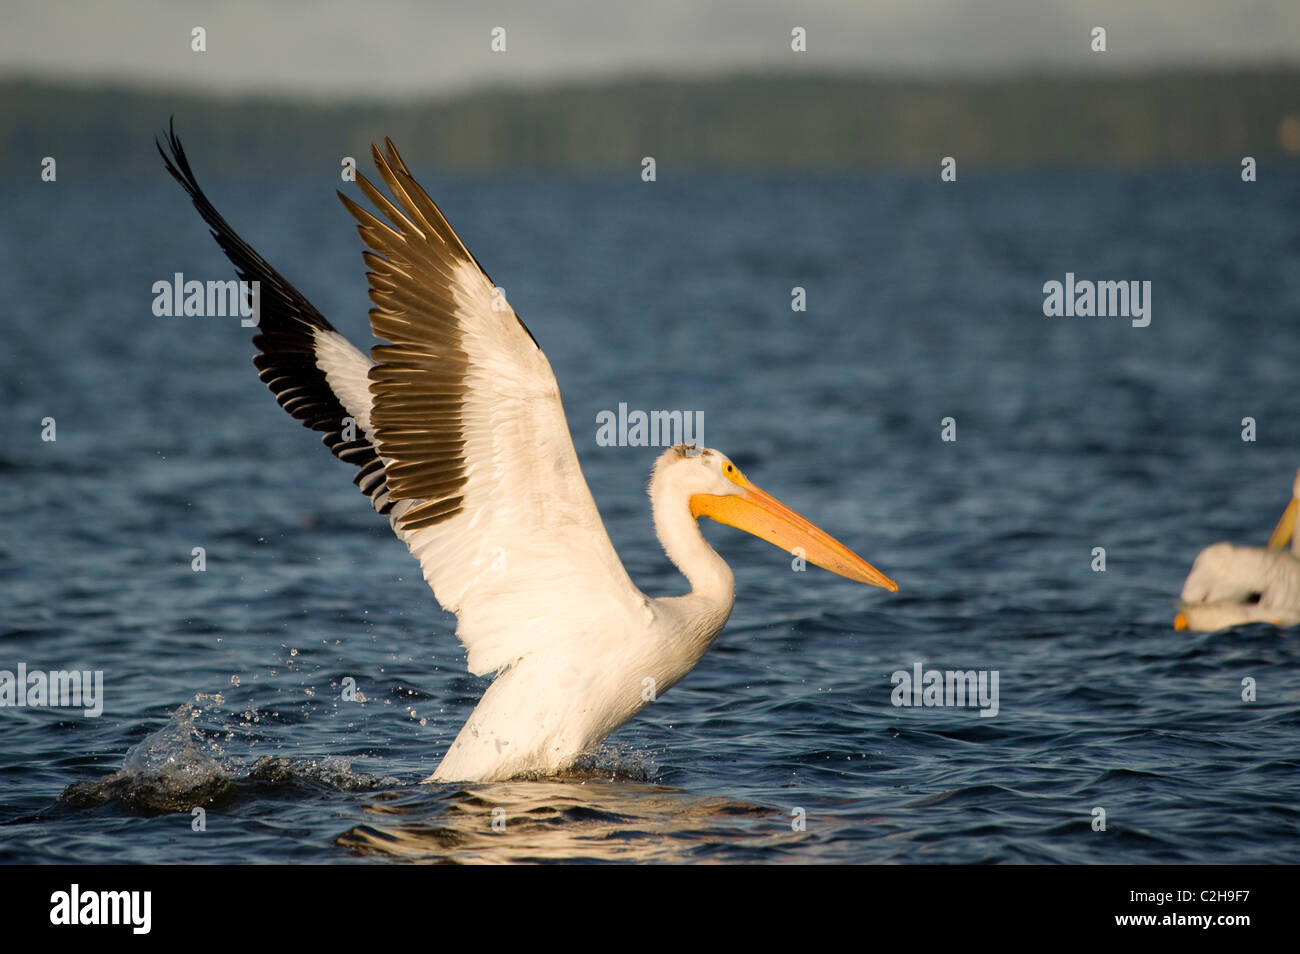 Lake Of The Woods, Ontario, Canada; Pelican Preparing To Take Flight Stock Photo